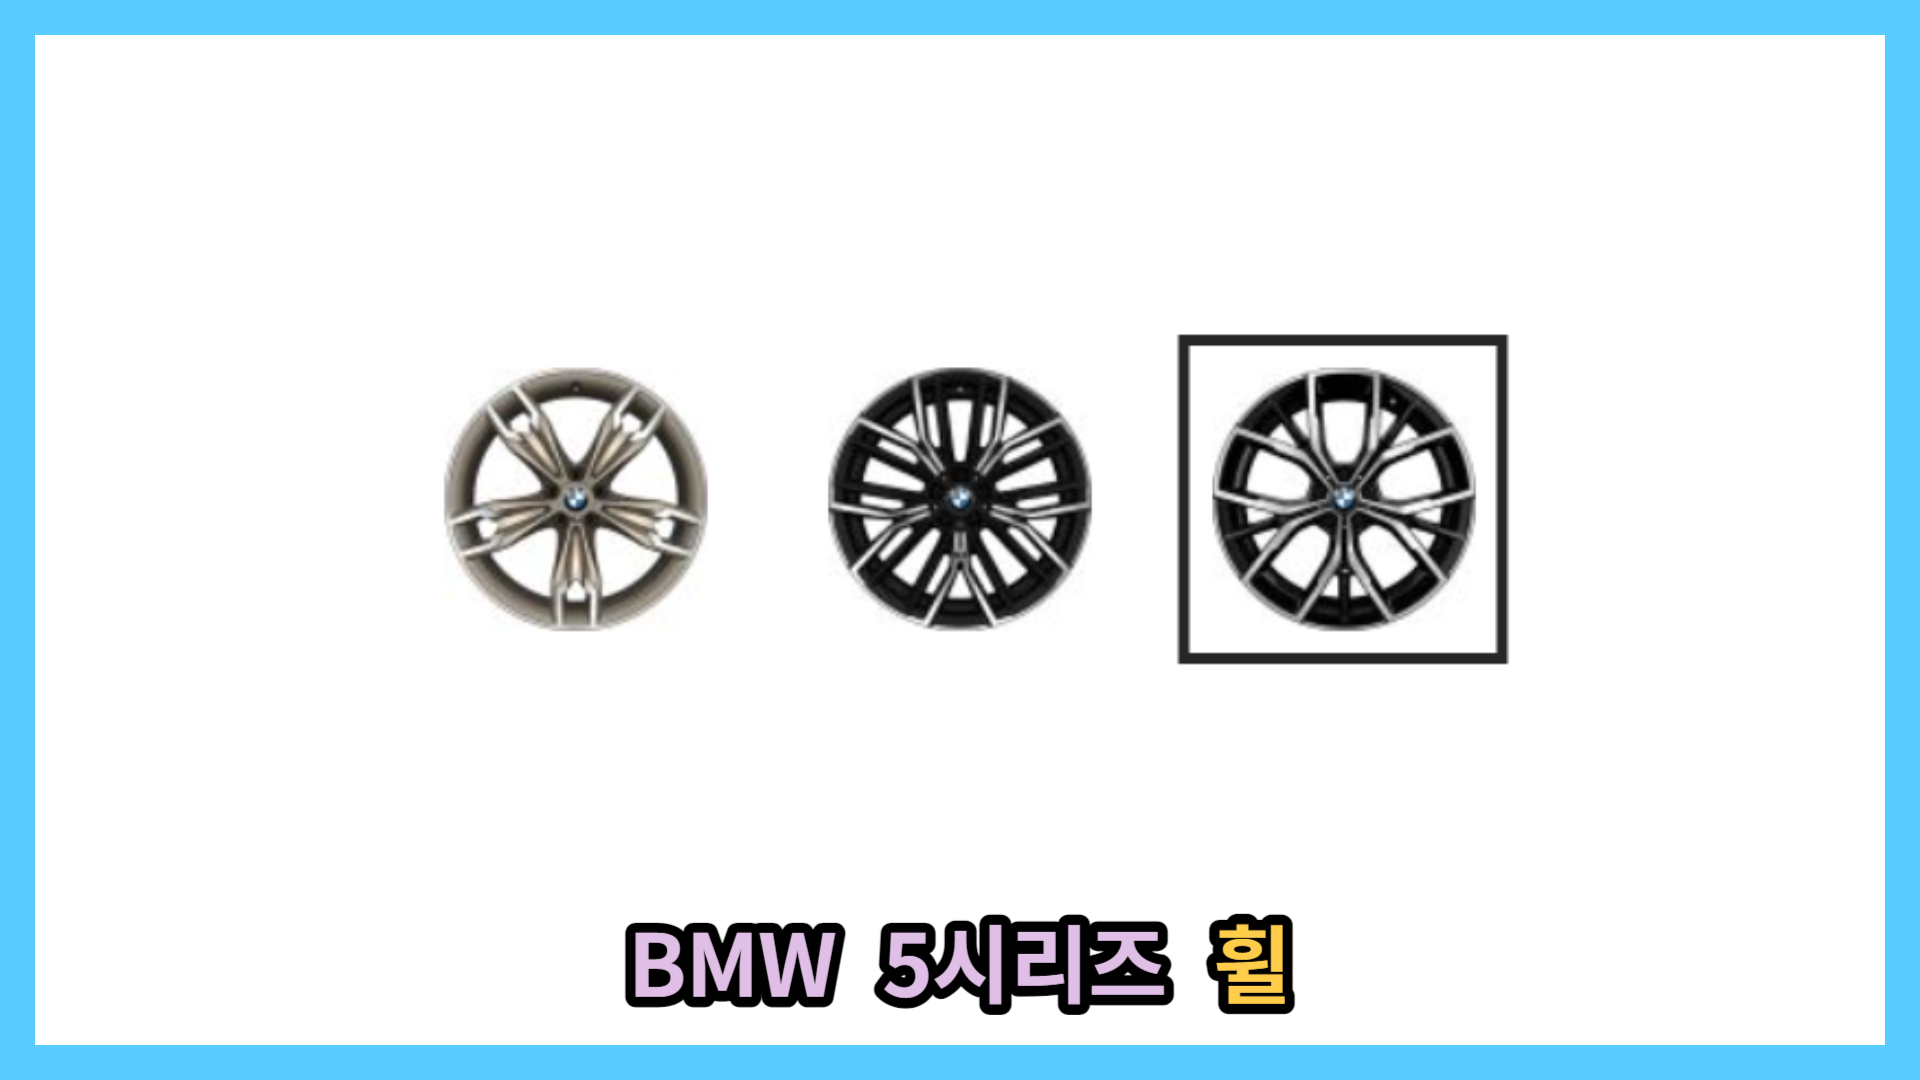 BMW 5시리즈 휠